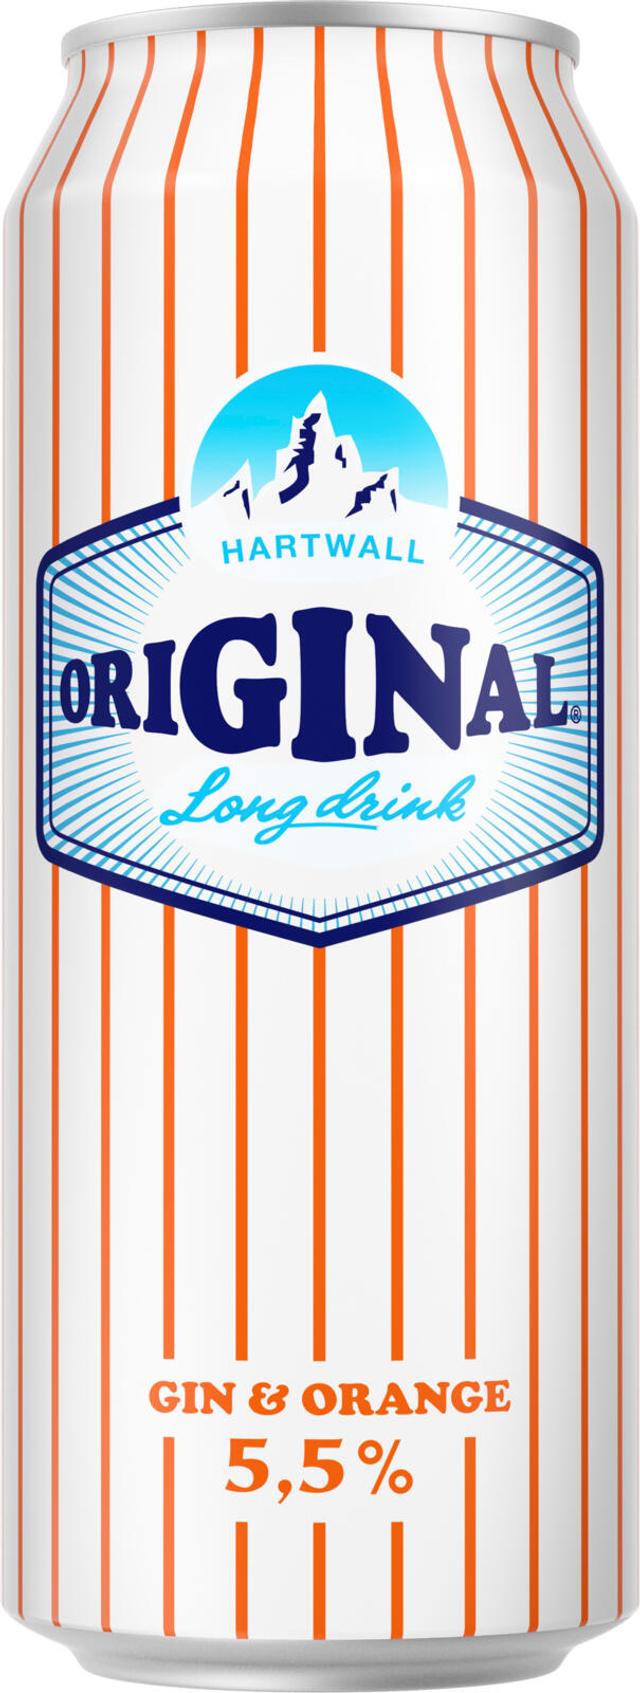 Hartwall Original Long Drink White Label Orange 5,5% 0,5 l